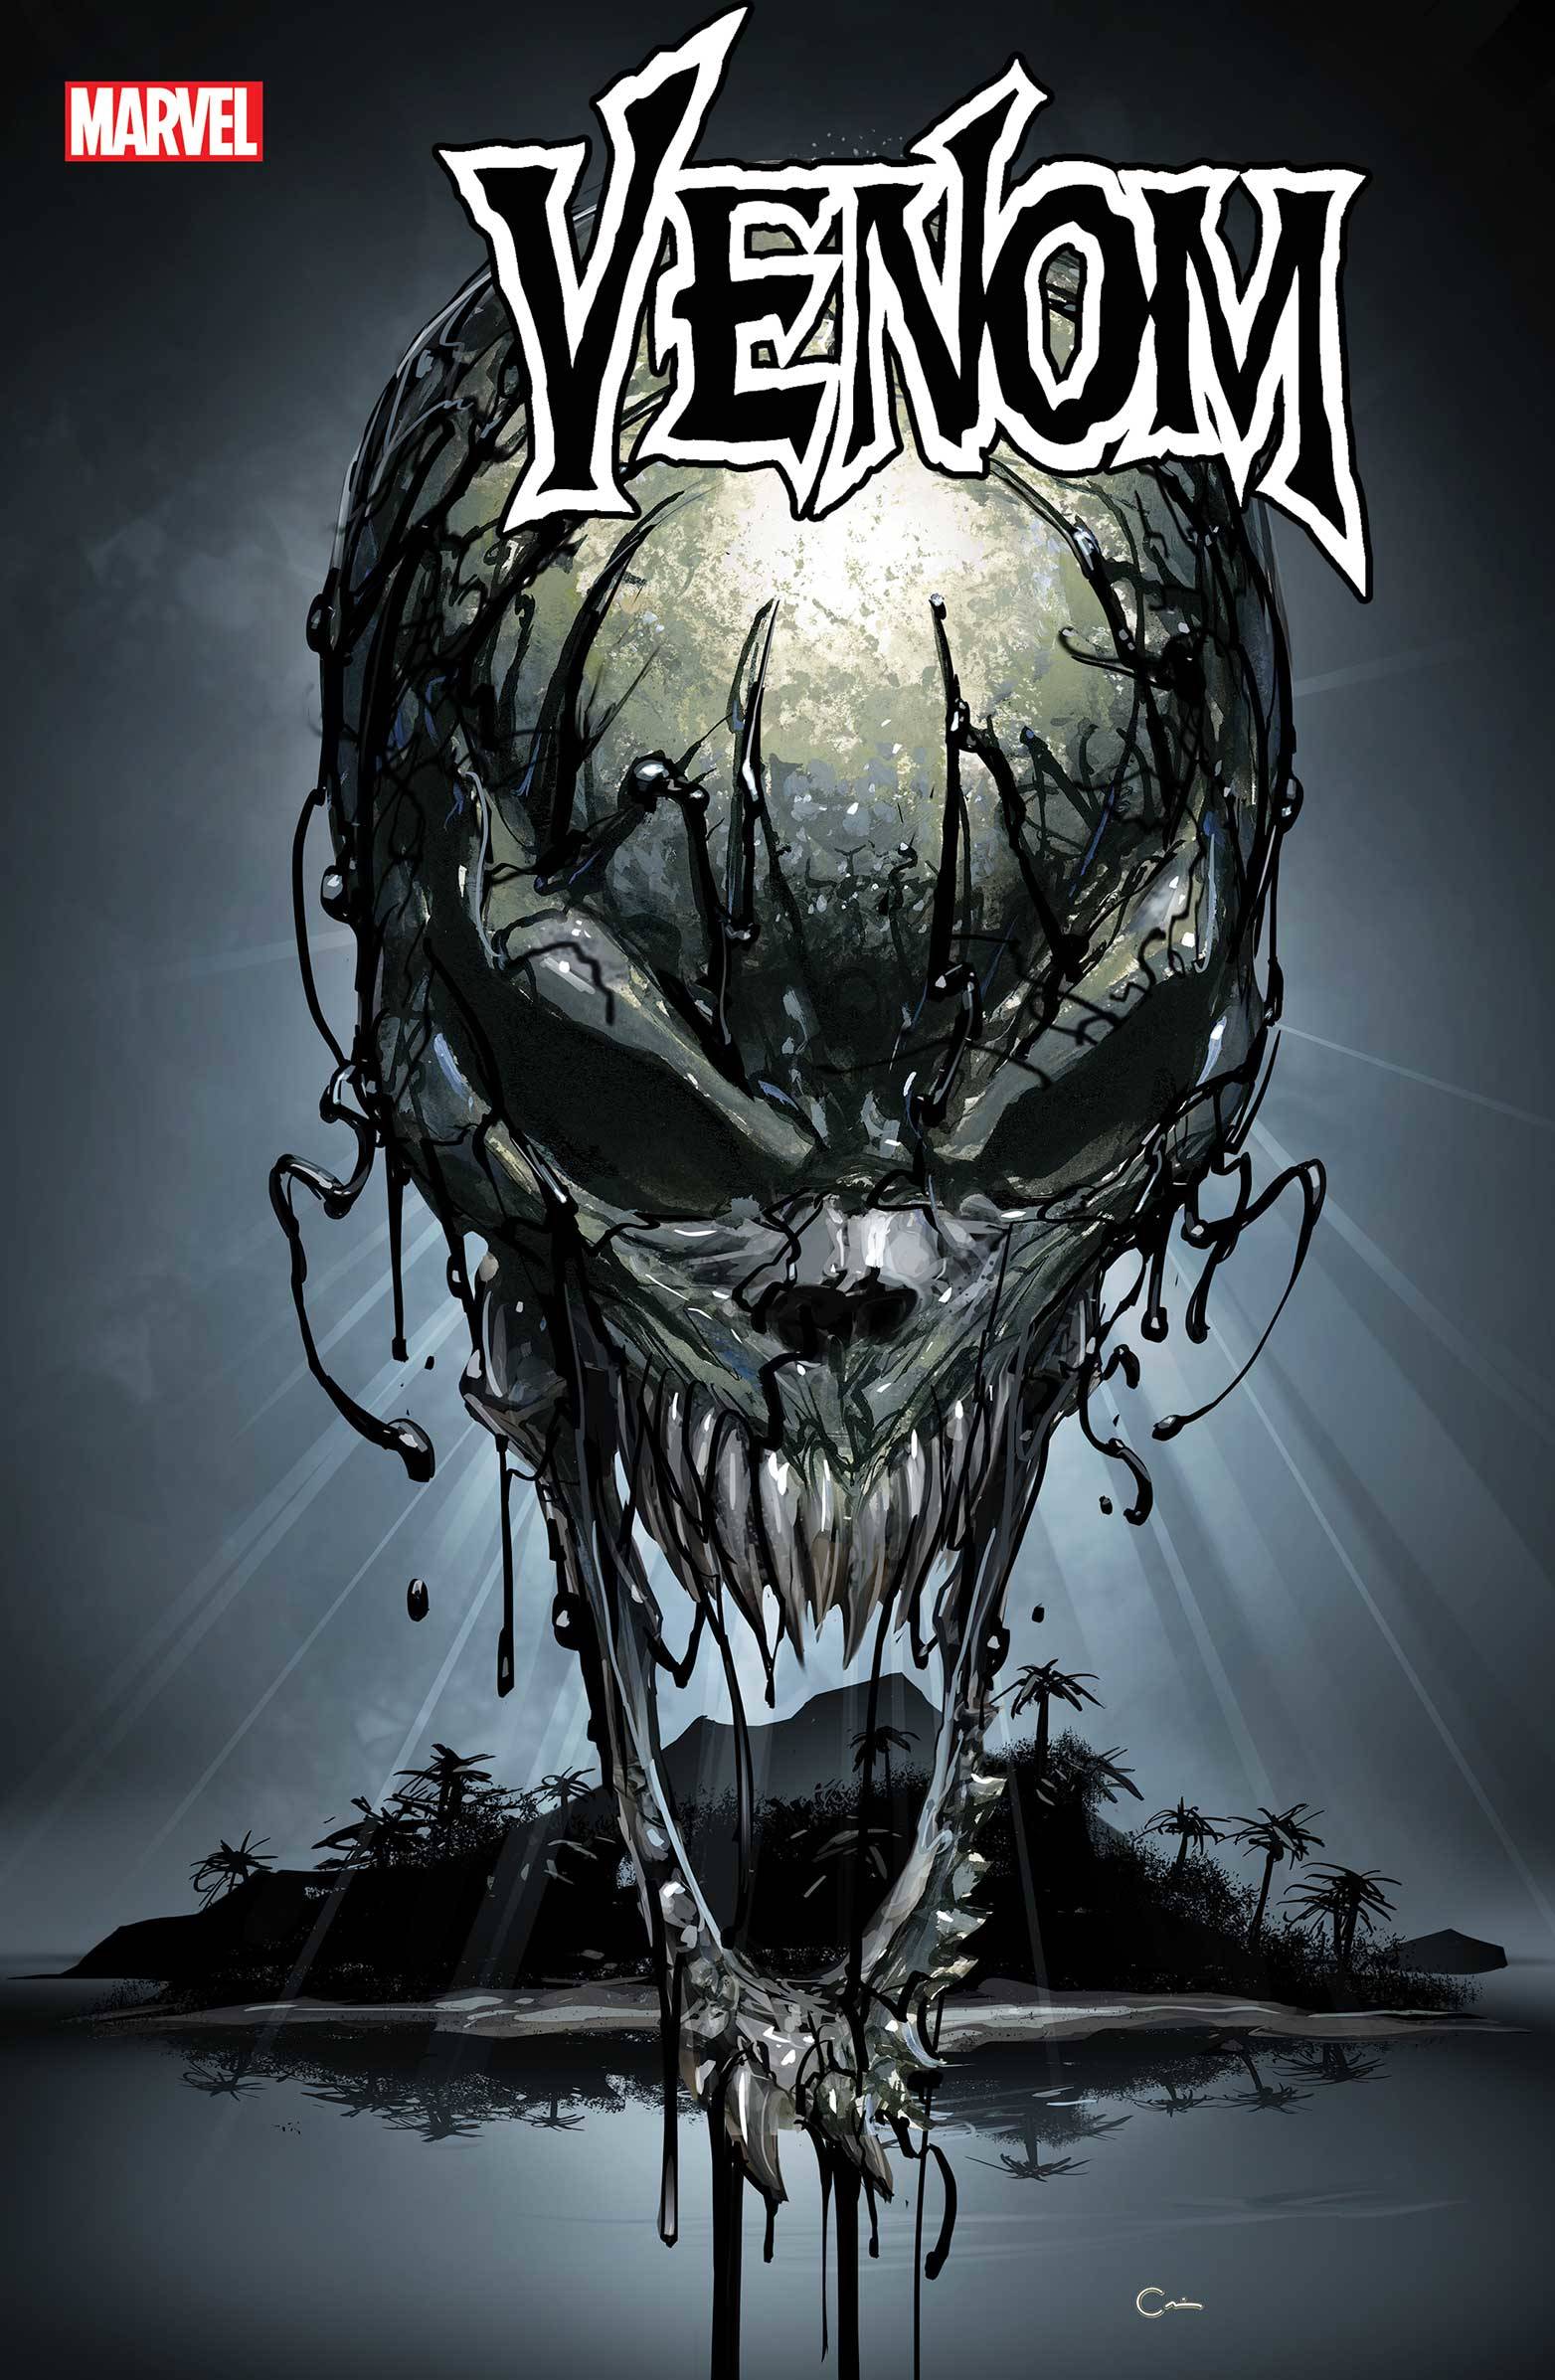 Venom #21 by Crain Poster